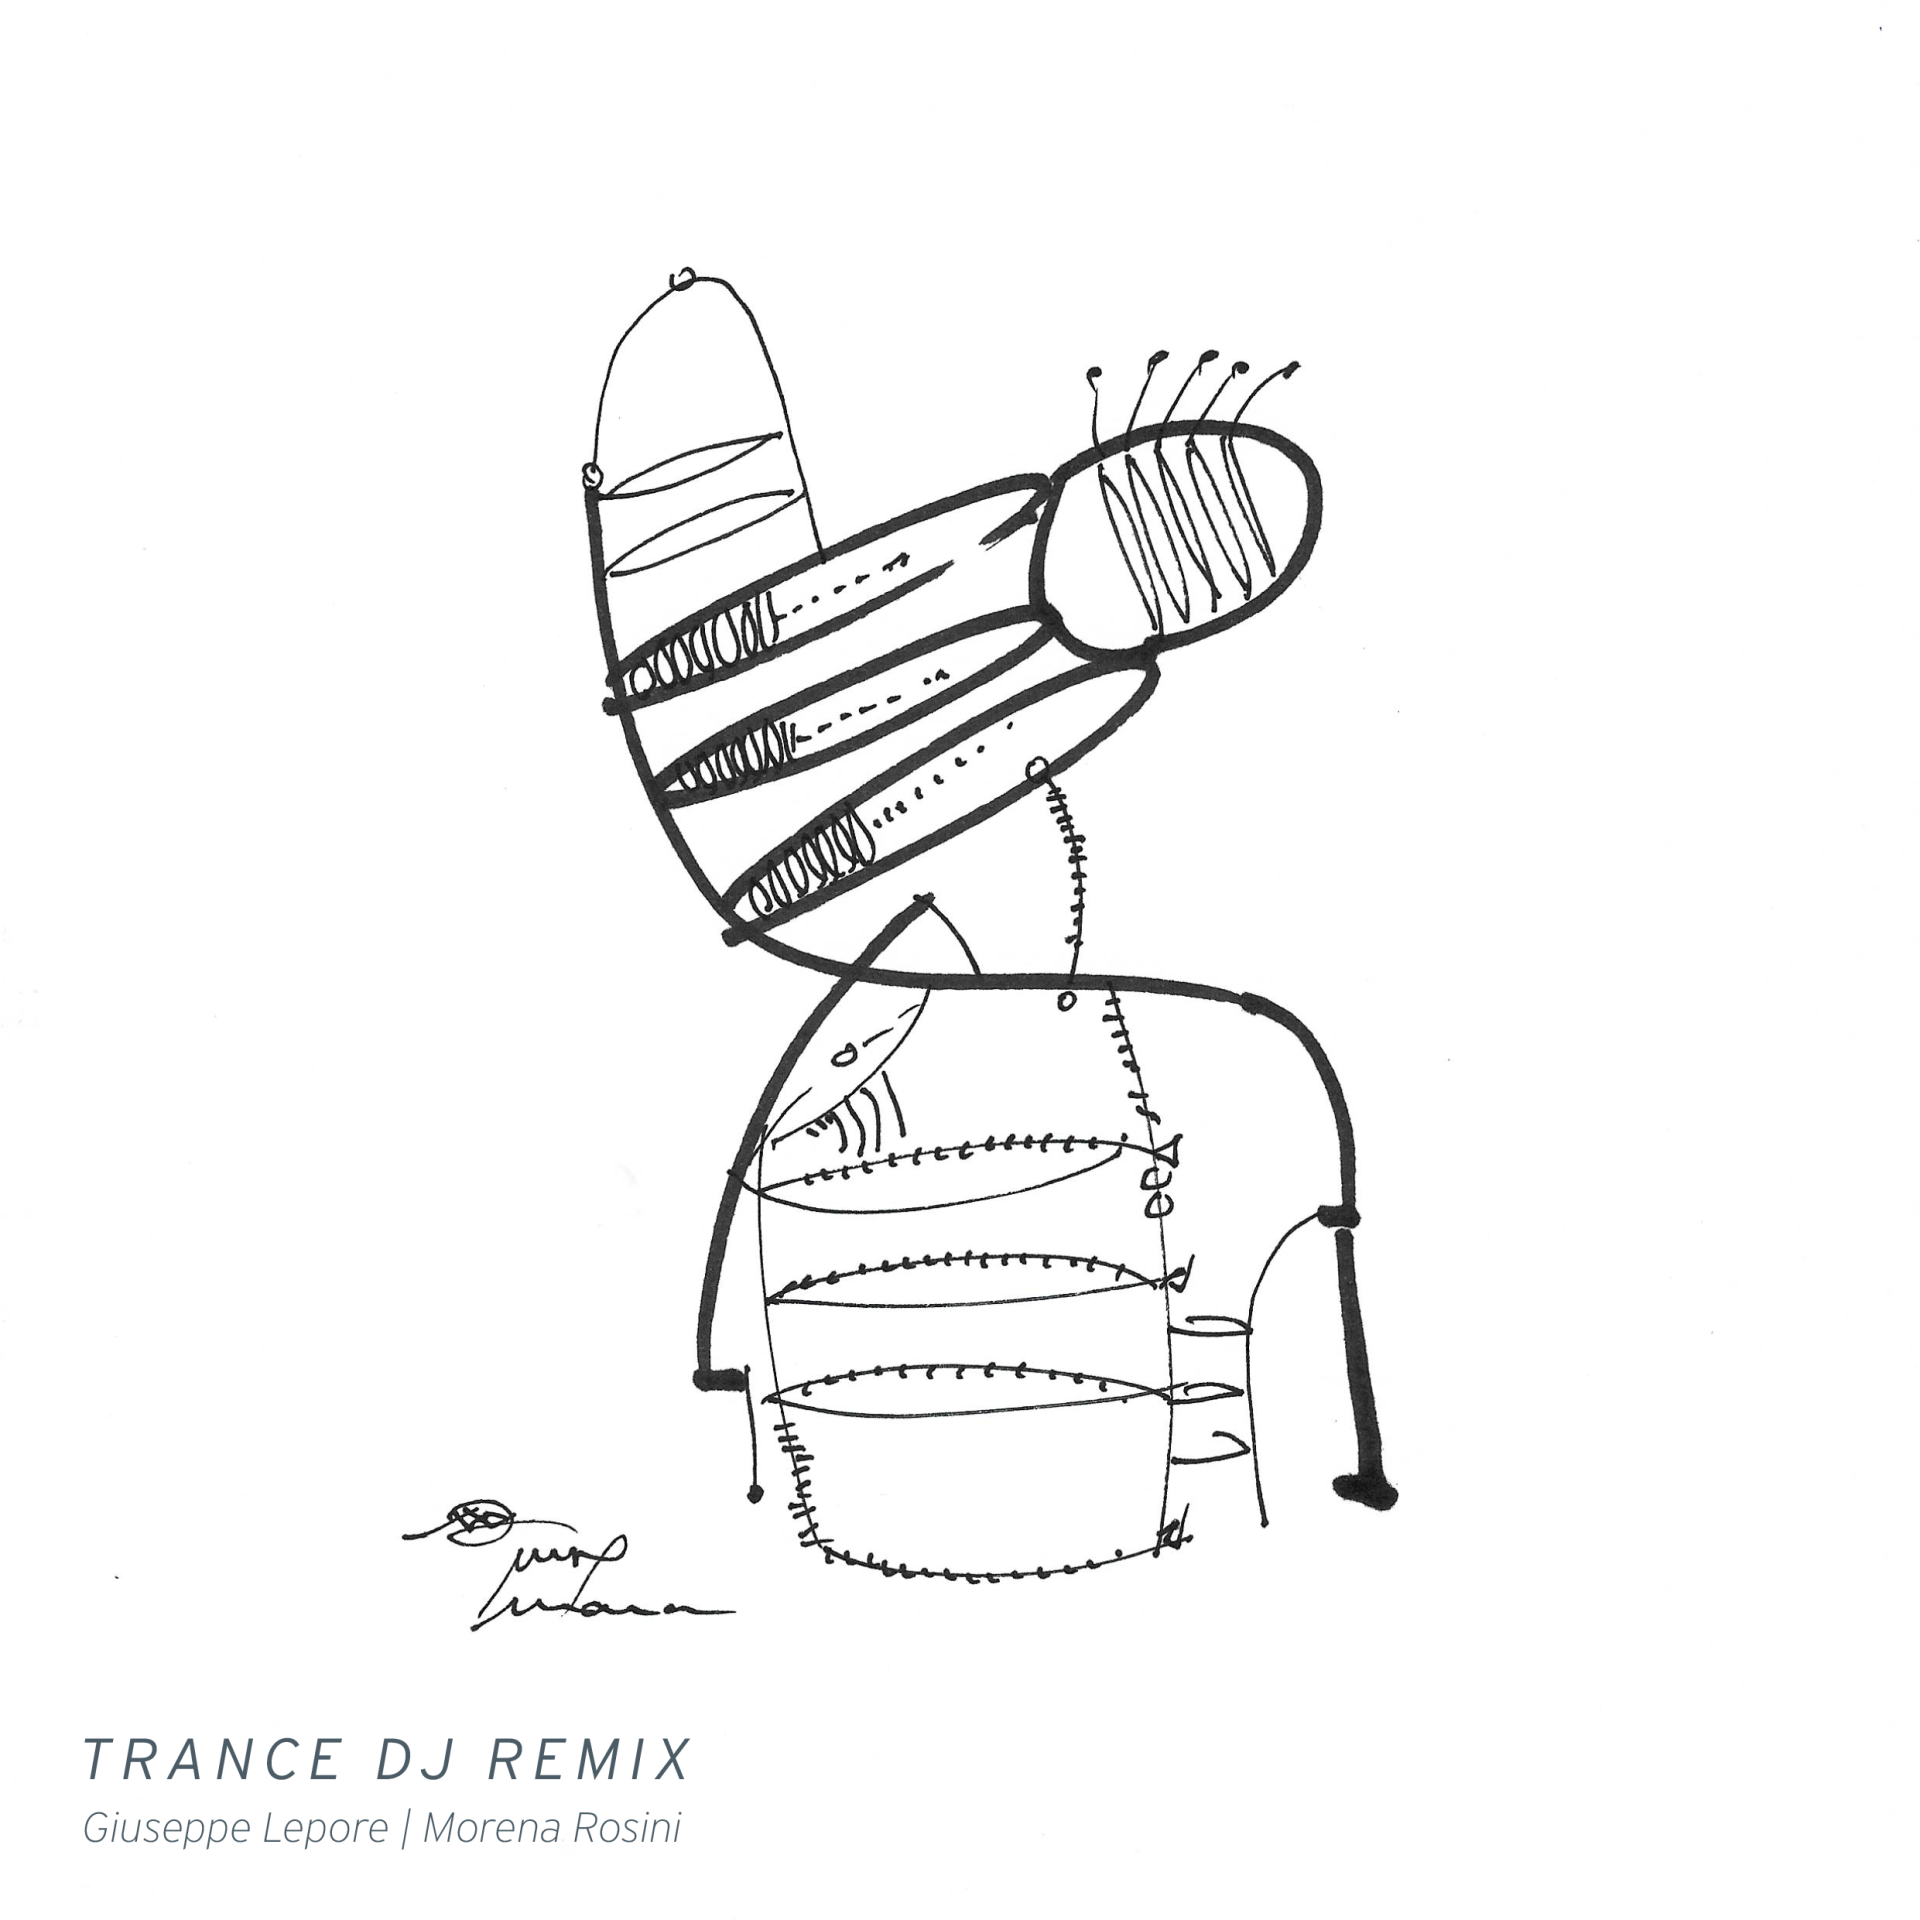 TRANCE DJ REMIX